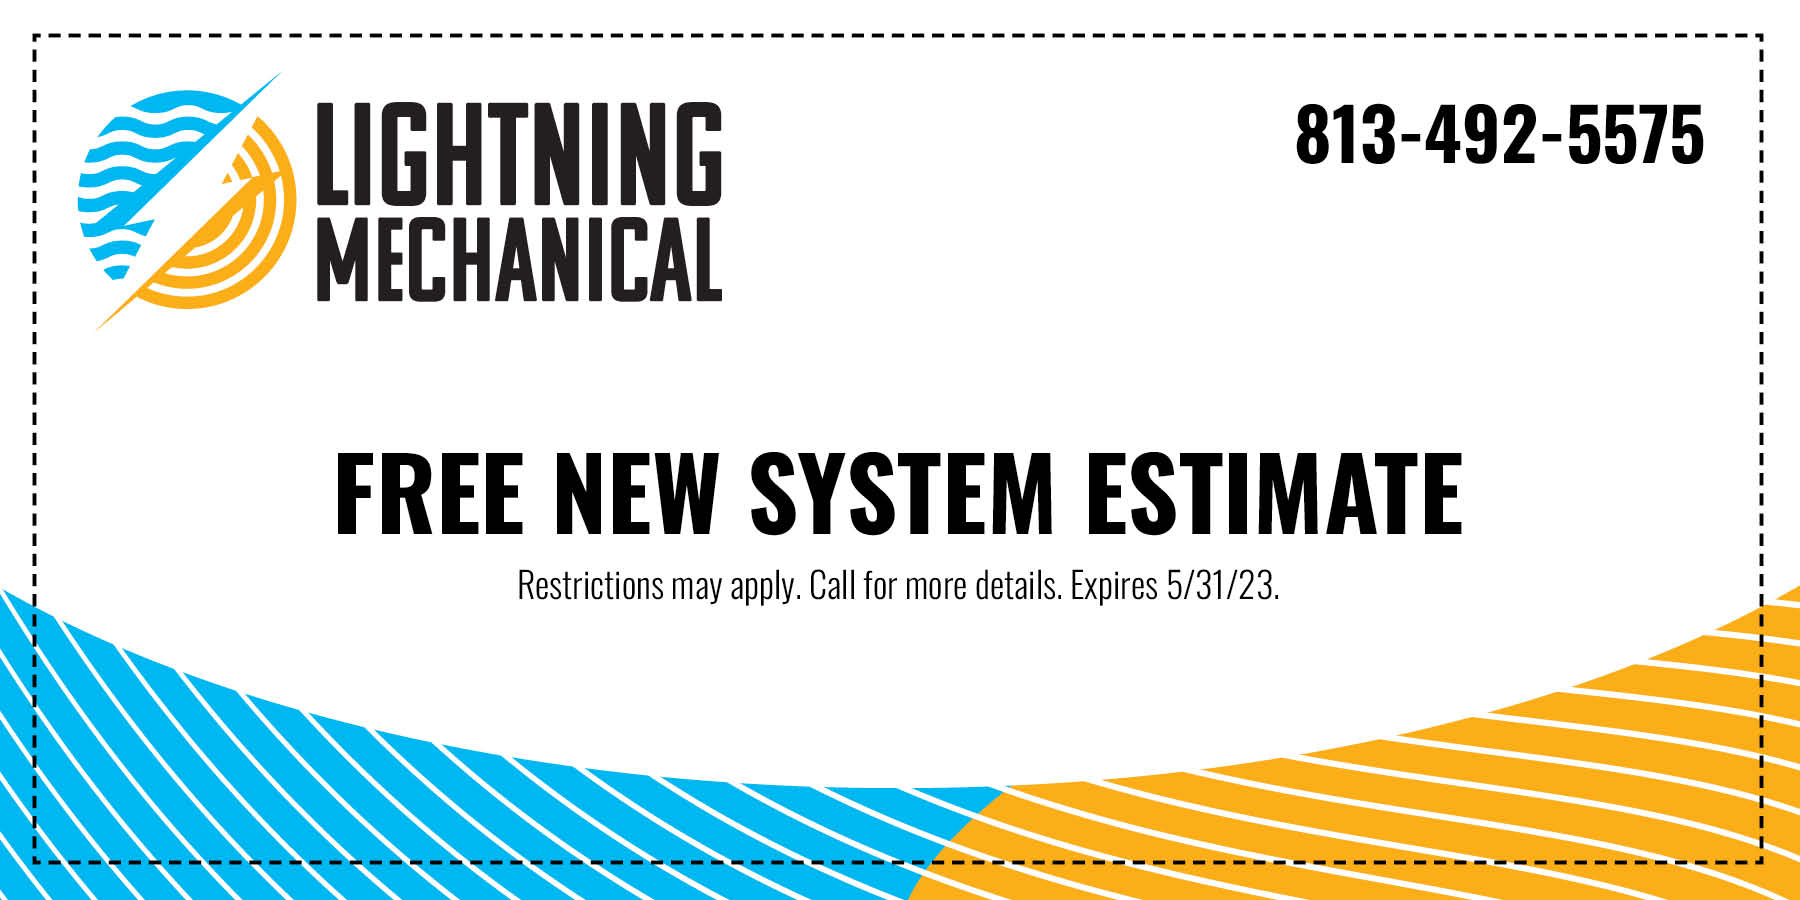 Free new system estimate expires 5/31/2023.